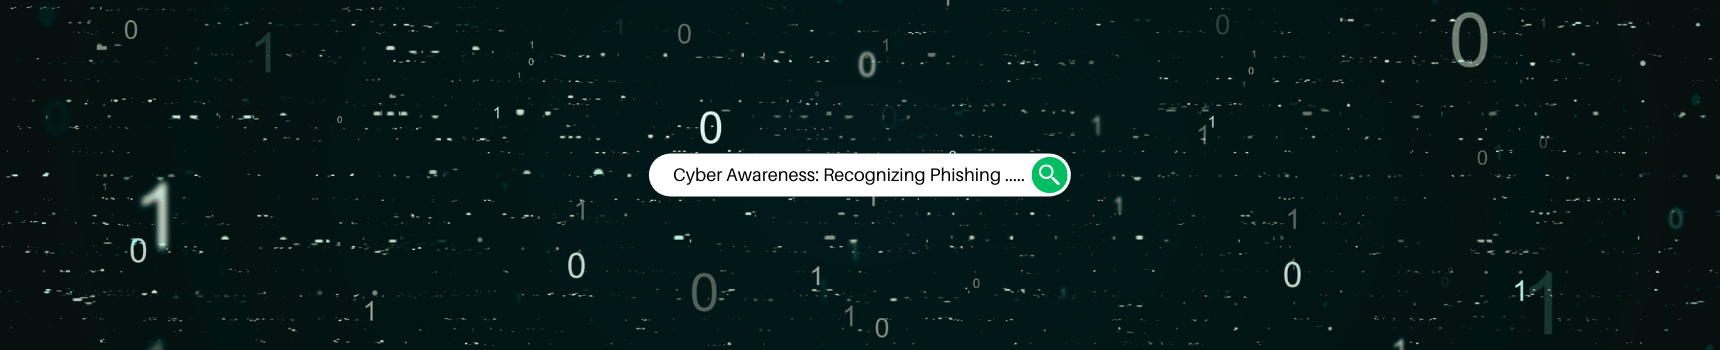 Cyber Awareness: Recognizing Phishing Attacks